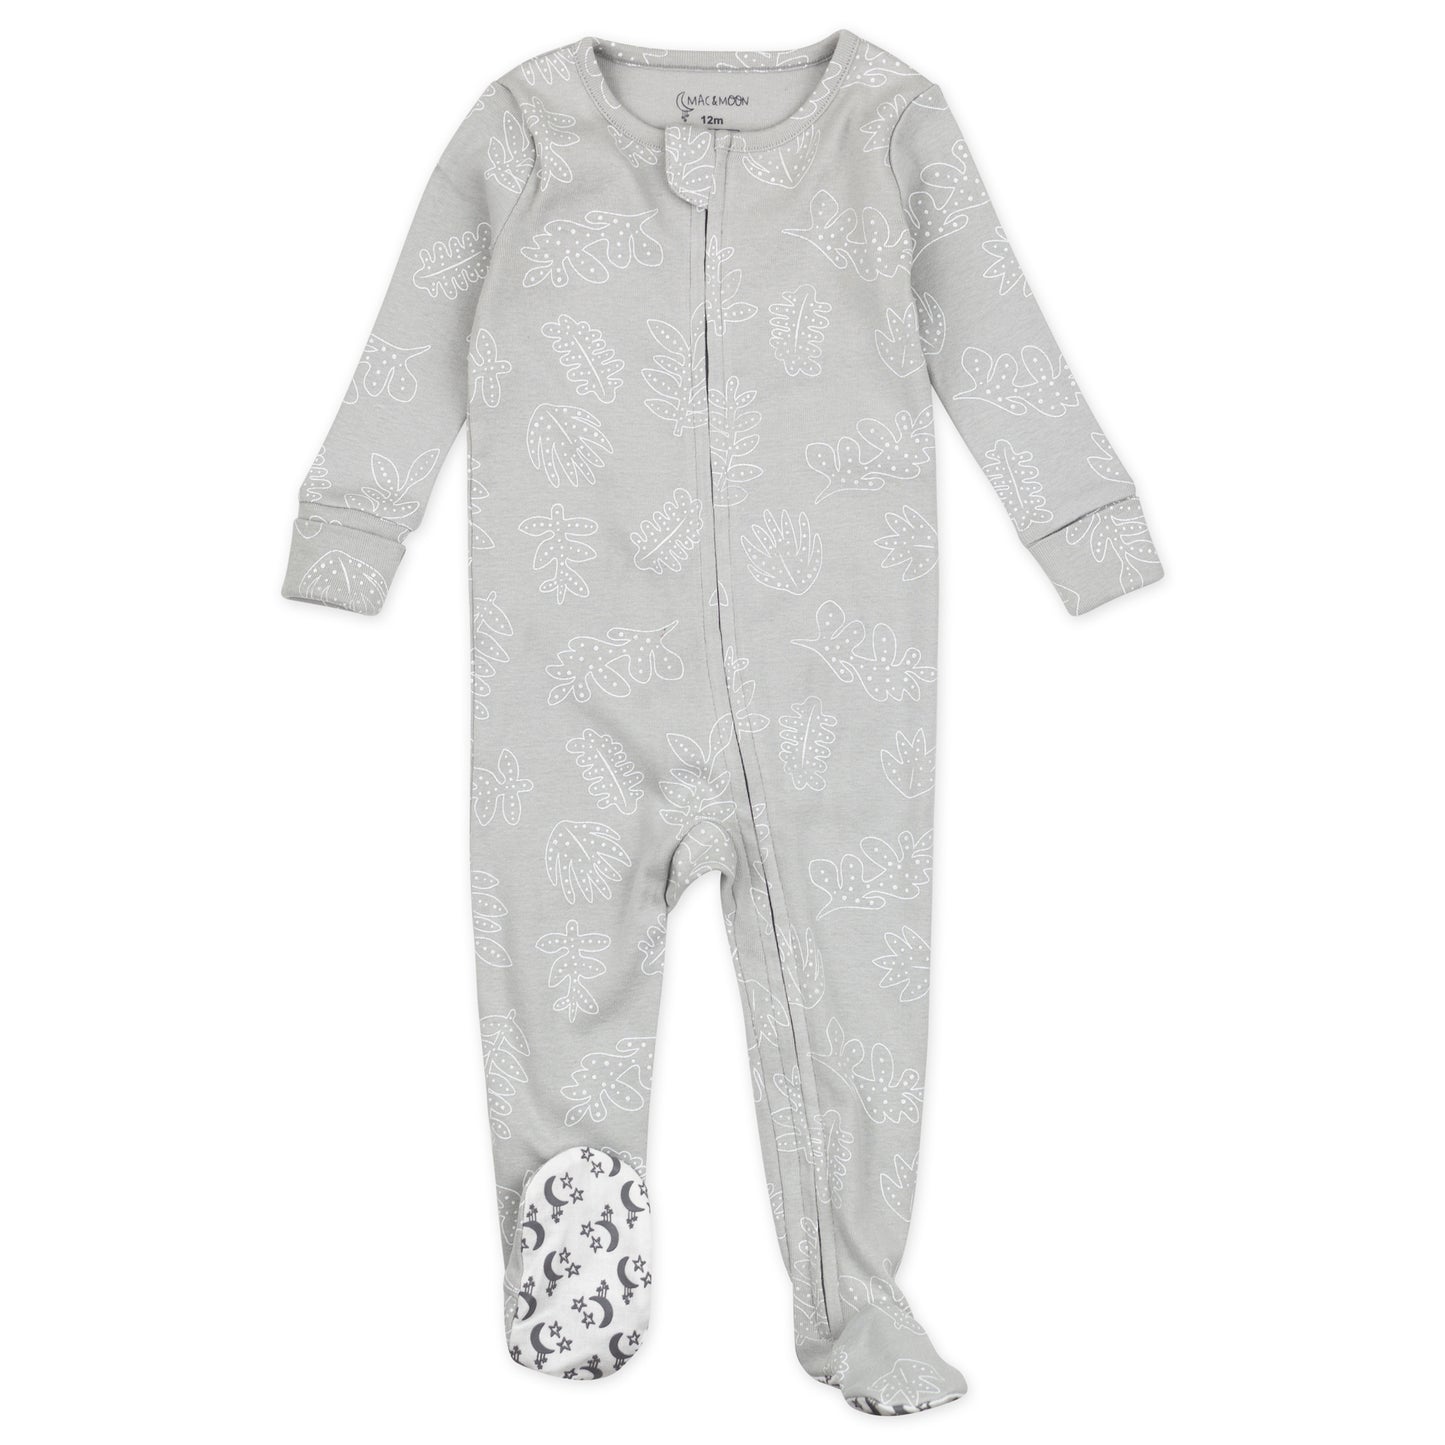 2-Pack Organic Cotton Footed Pajamas in Koala Print